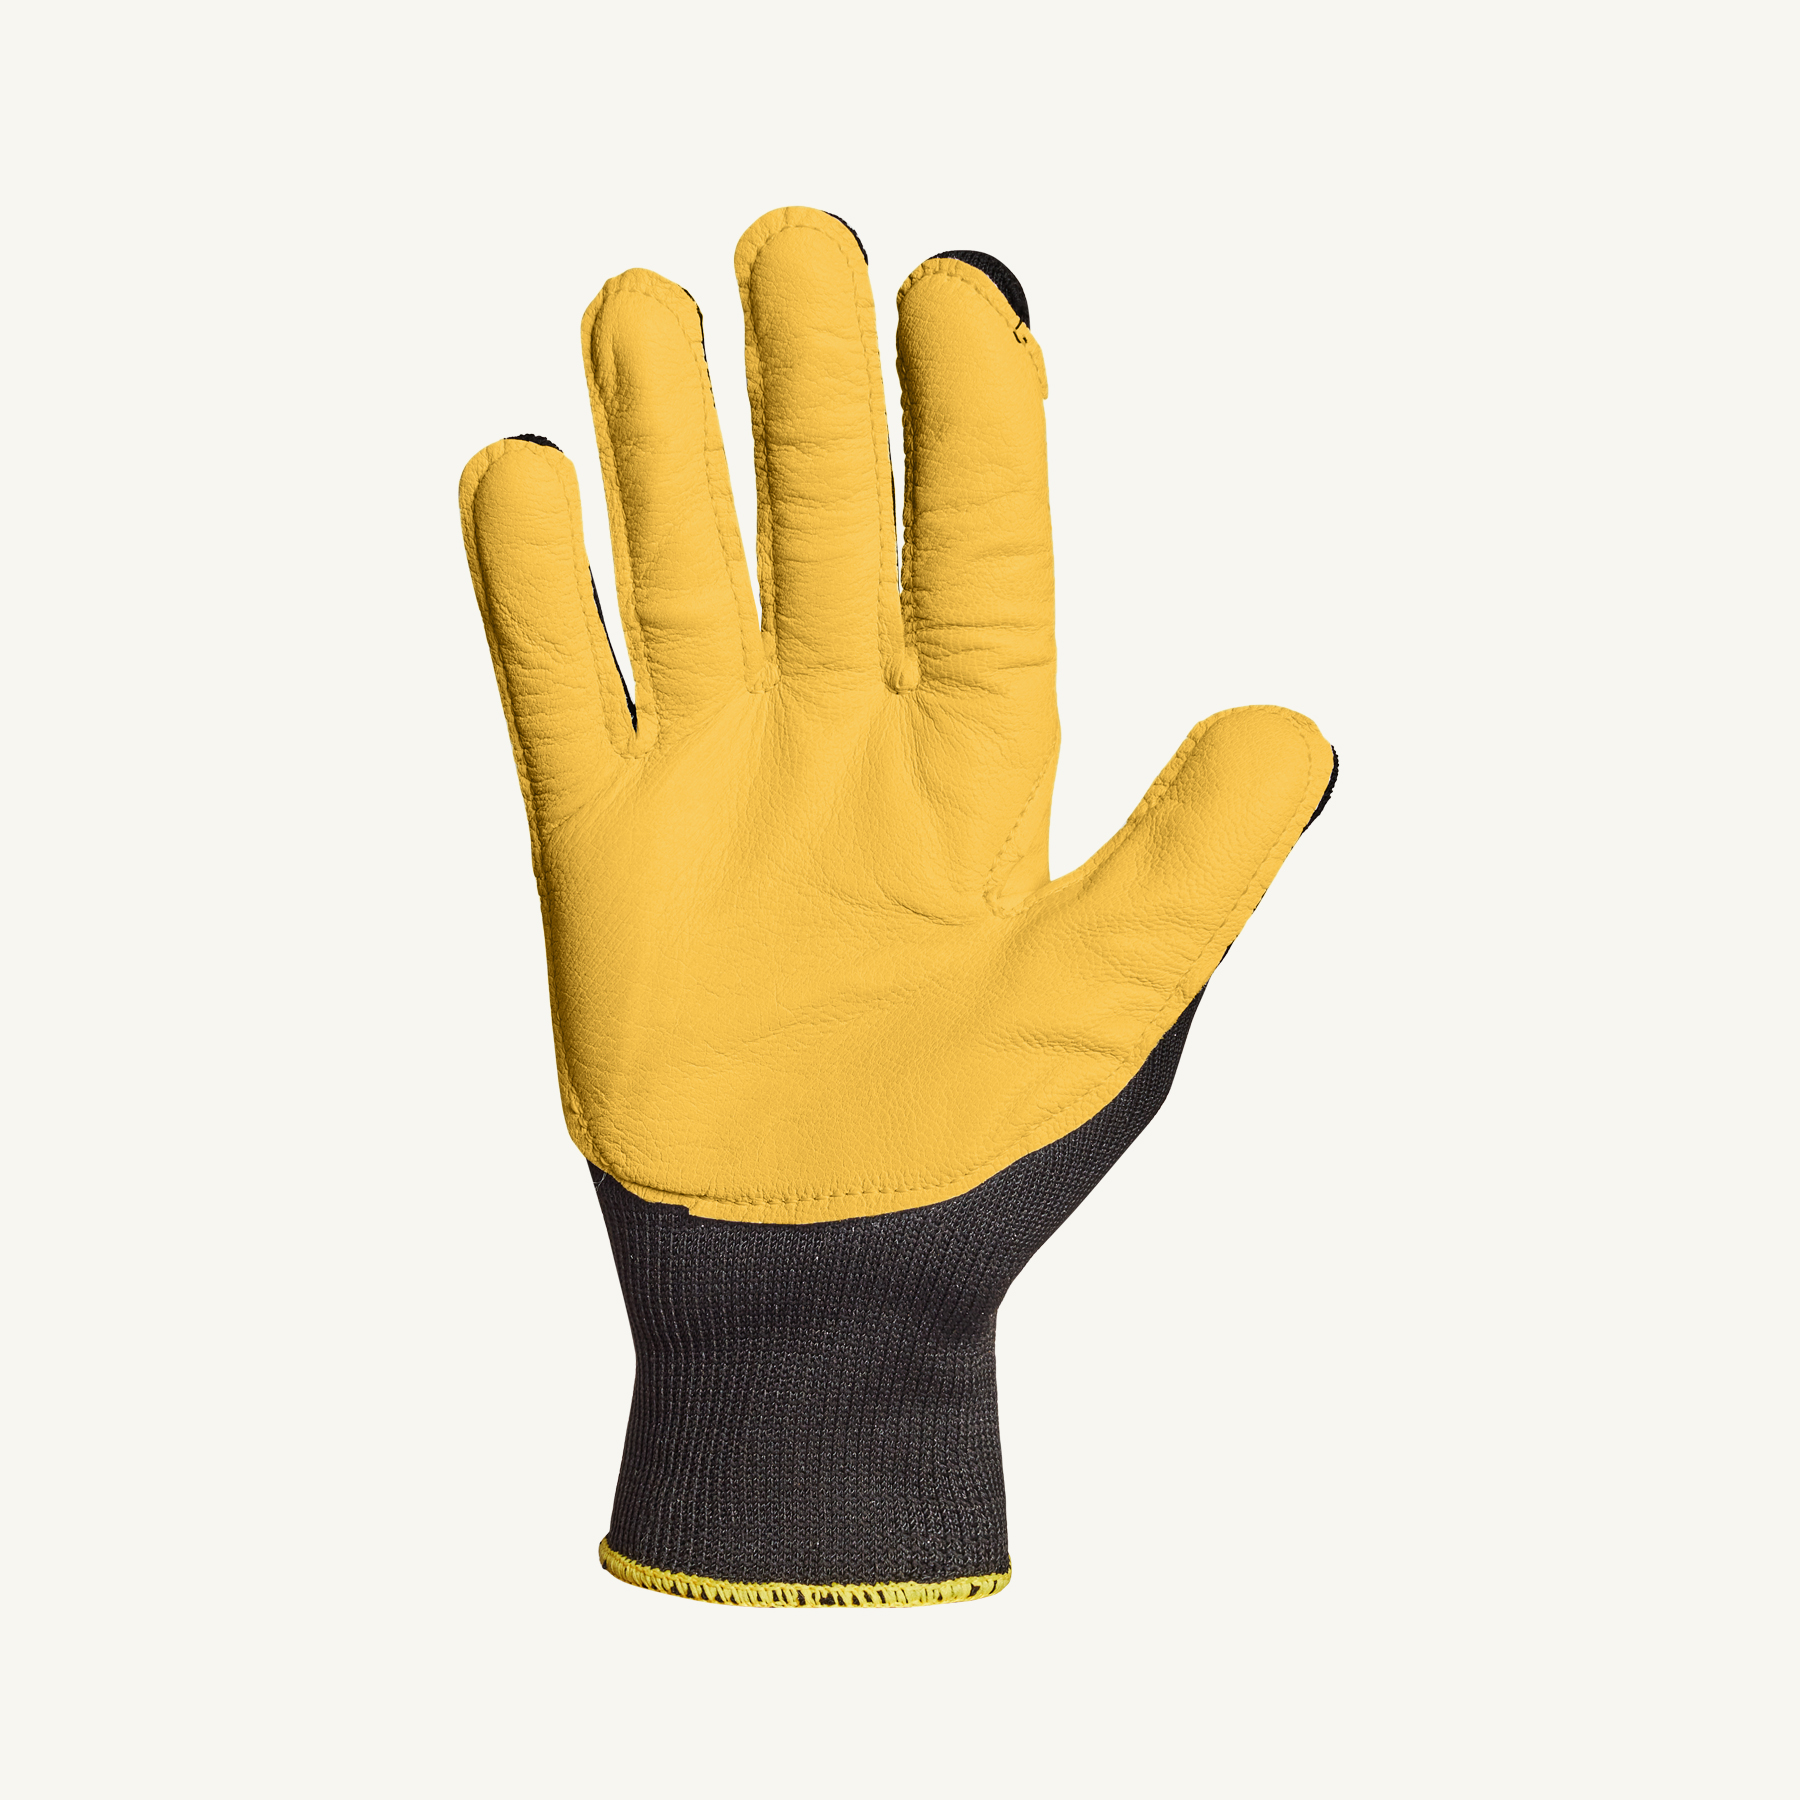 S13KBGLP Superior Glove® Emerald CX™ Kevlar Knit Cut & Puncture Resistant Work Glove w/ Goat-Grain Palms